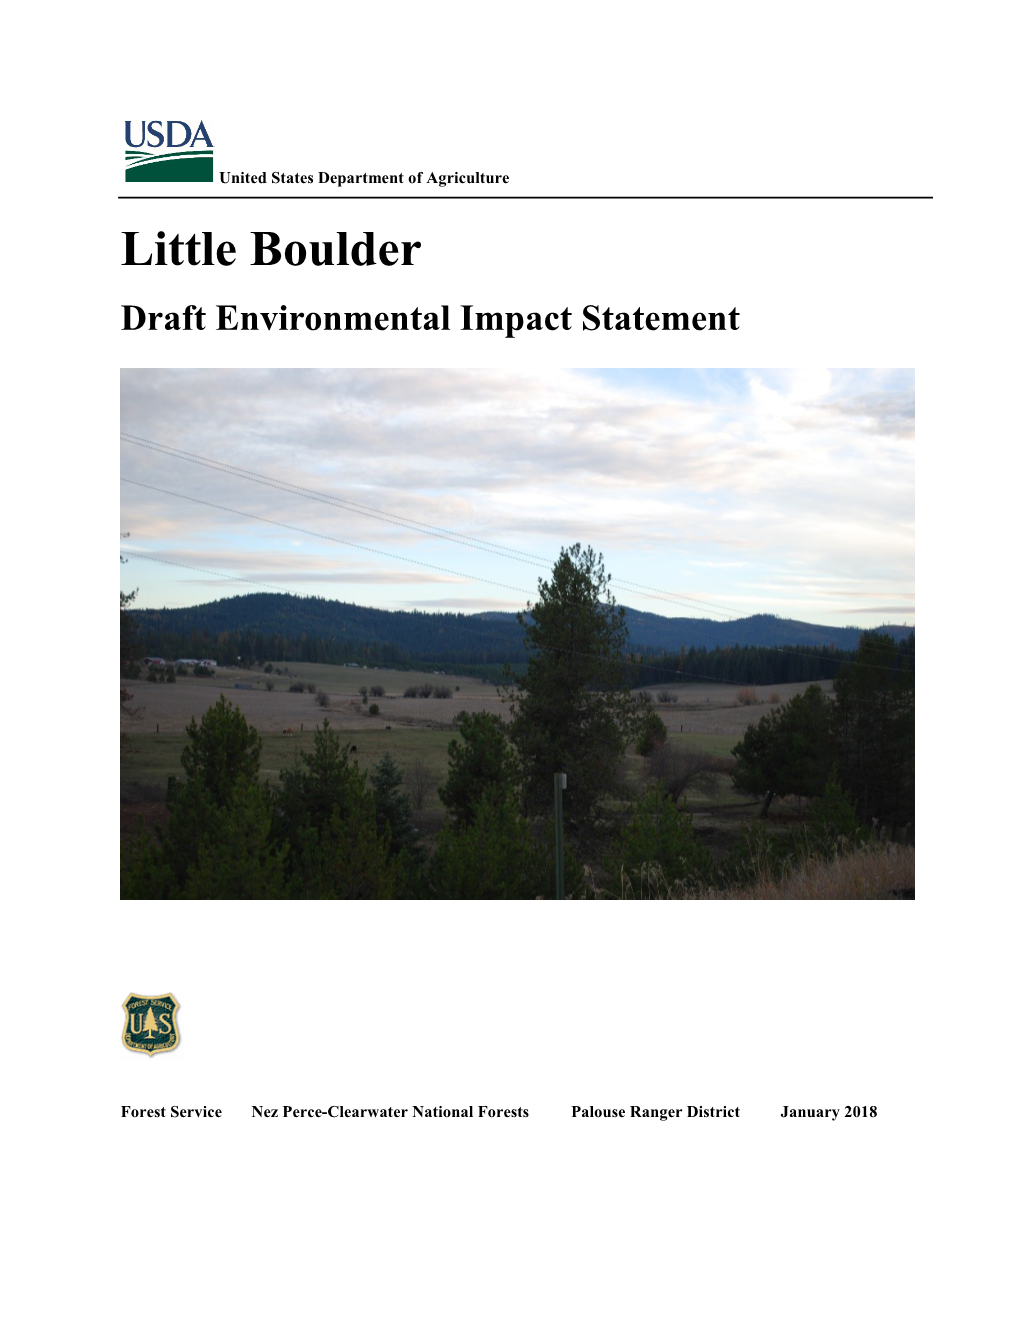 Little Boulder Draft Environmental Impact Statement